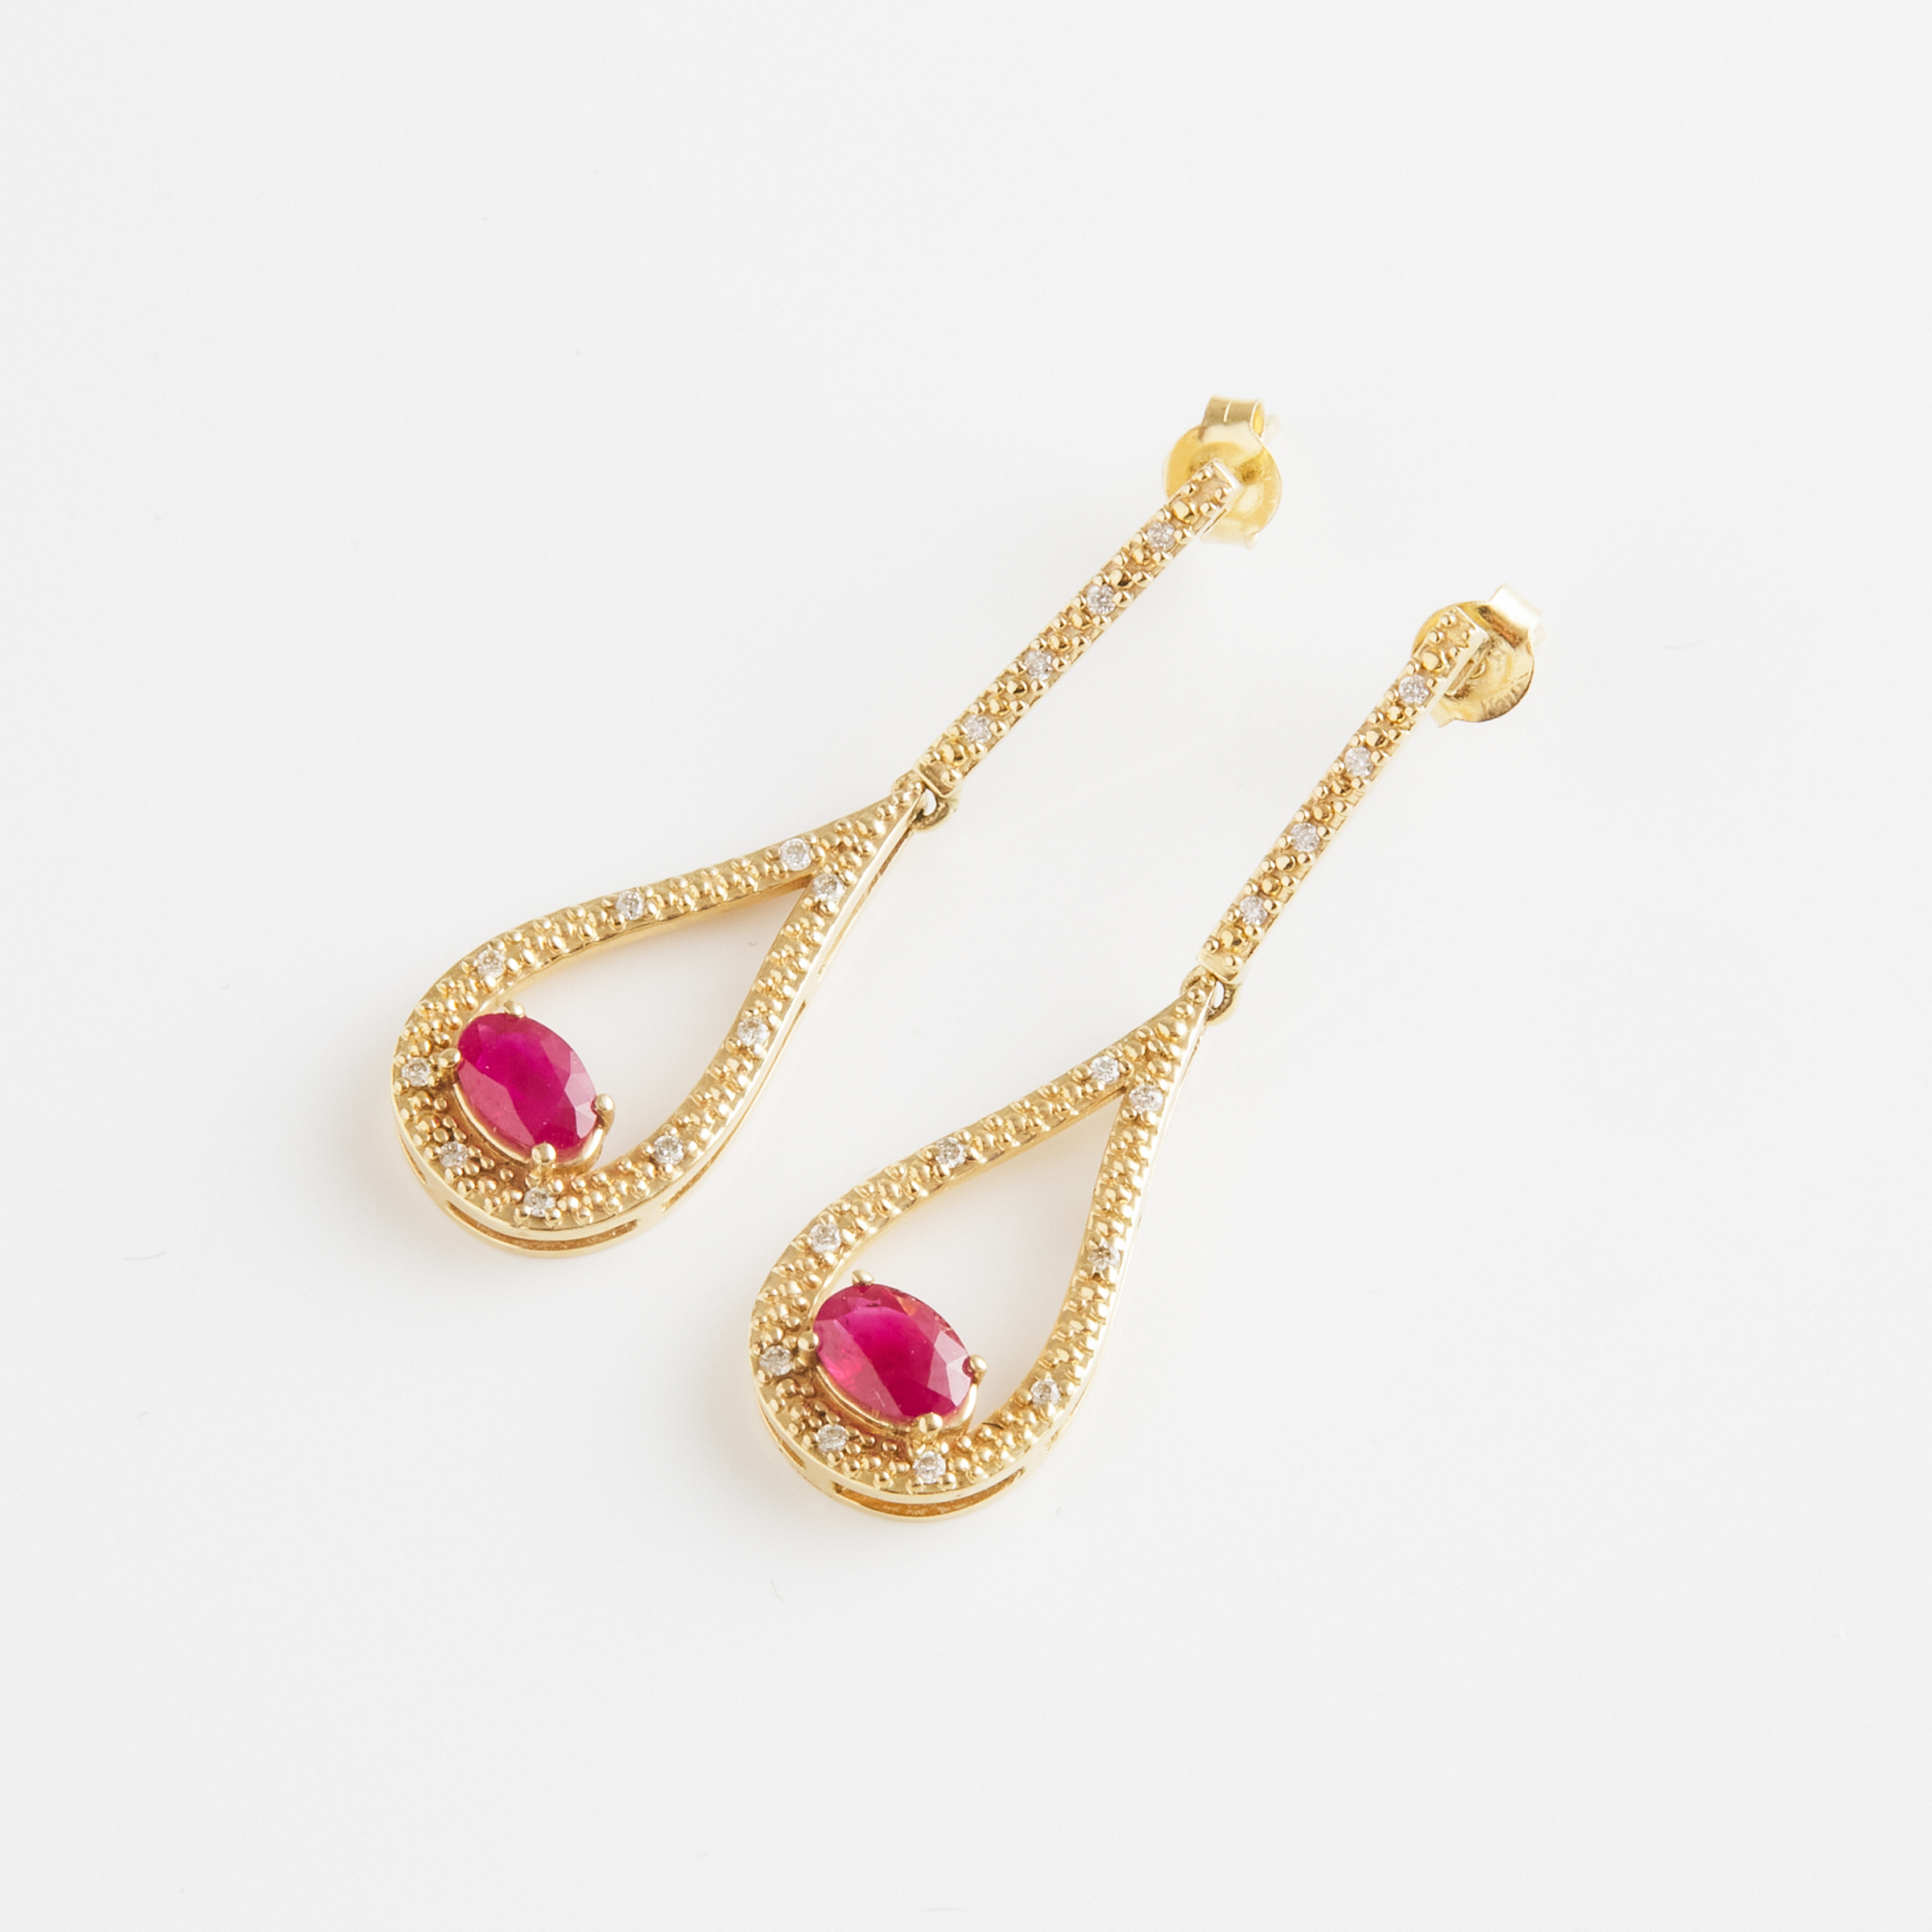 Pair Of 10k Yellow Gold Drop Earrings